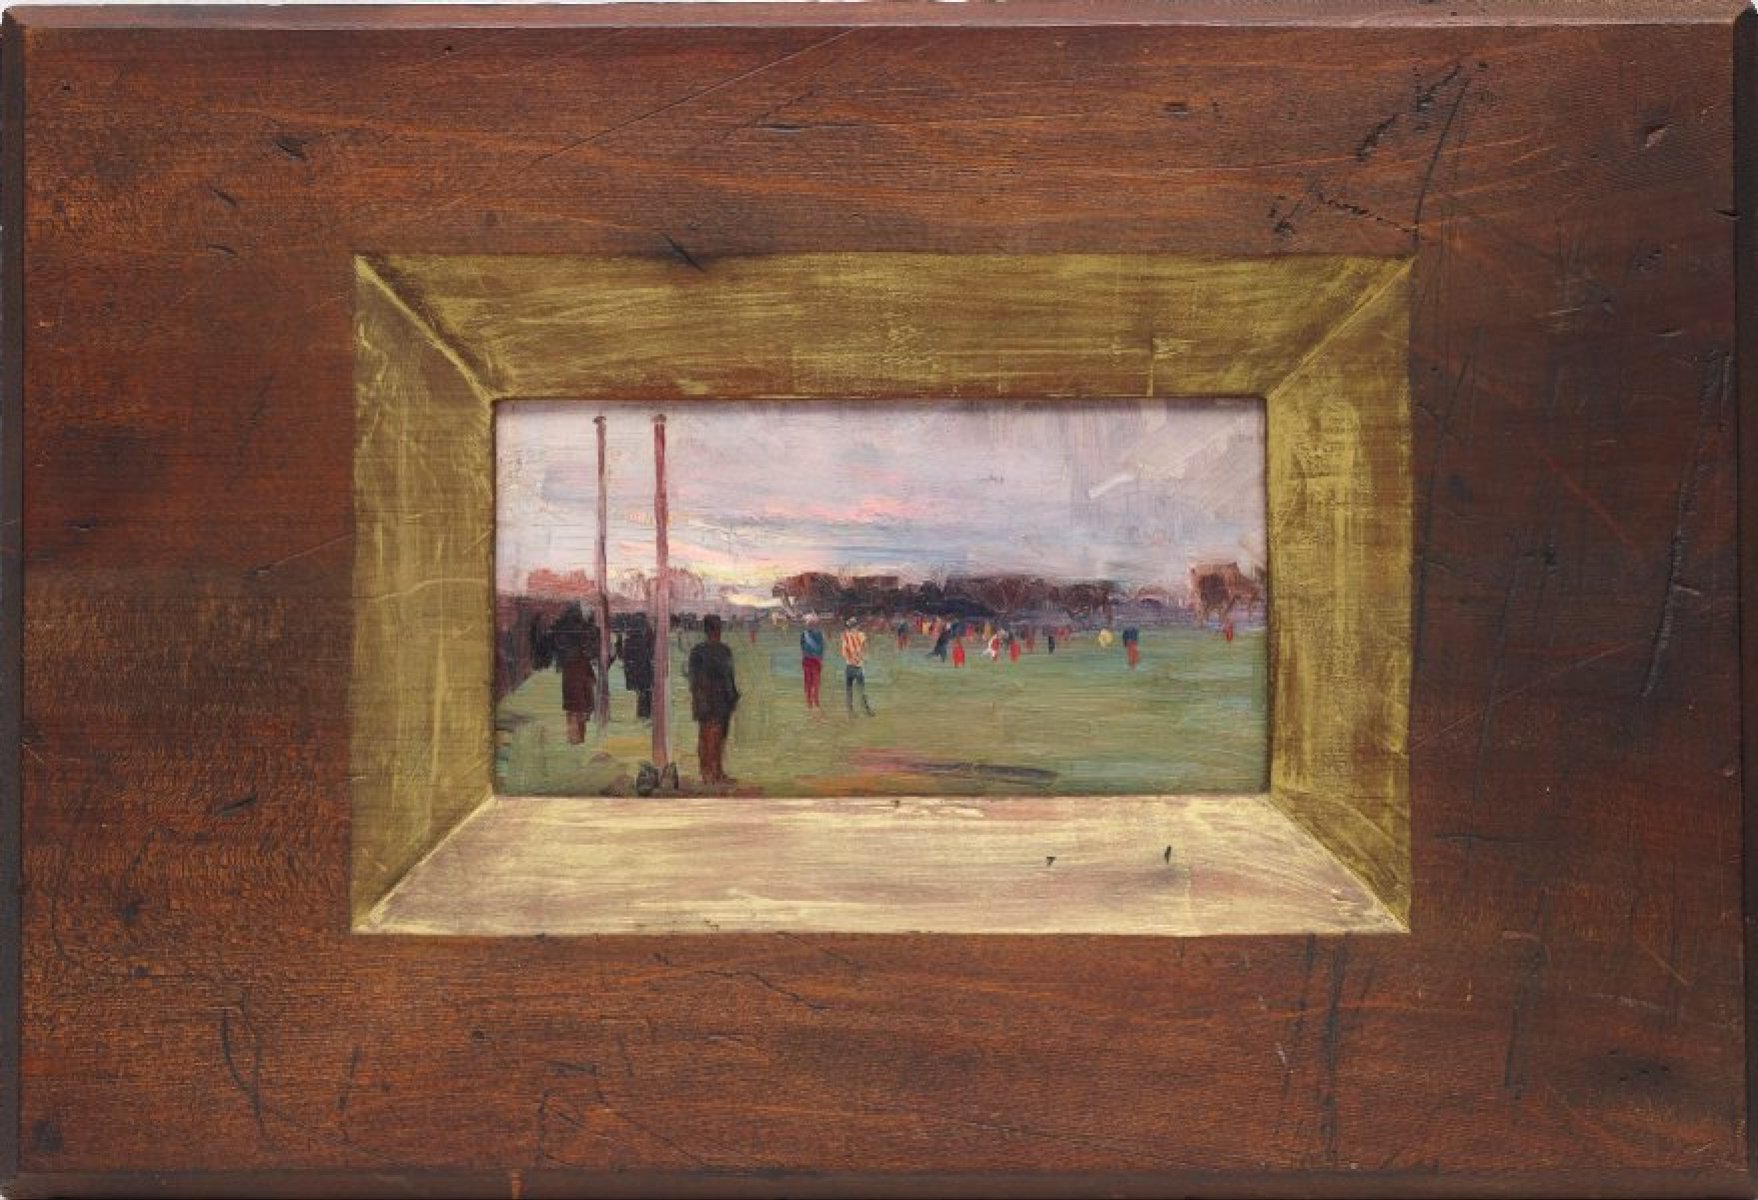  The national game  (1889)  Artist Arthur Streeton 